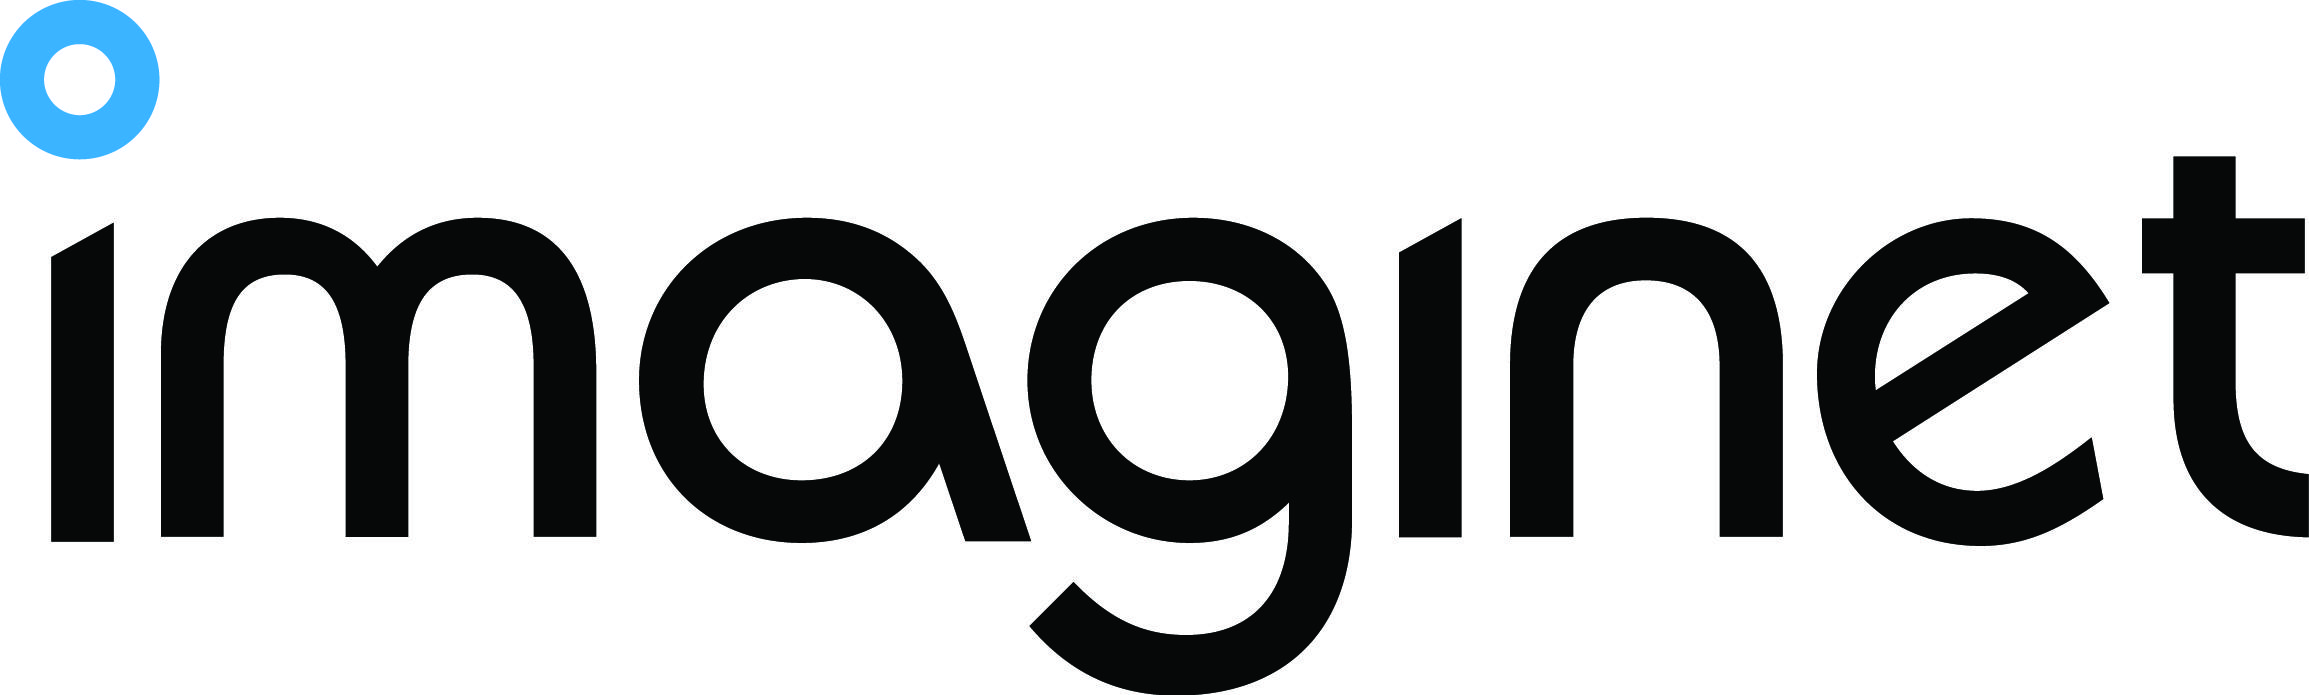 Imaginet_logo-no globe - Imaginet